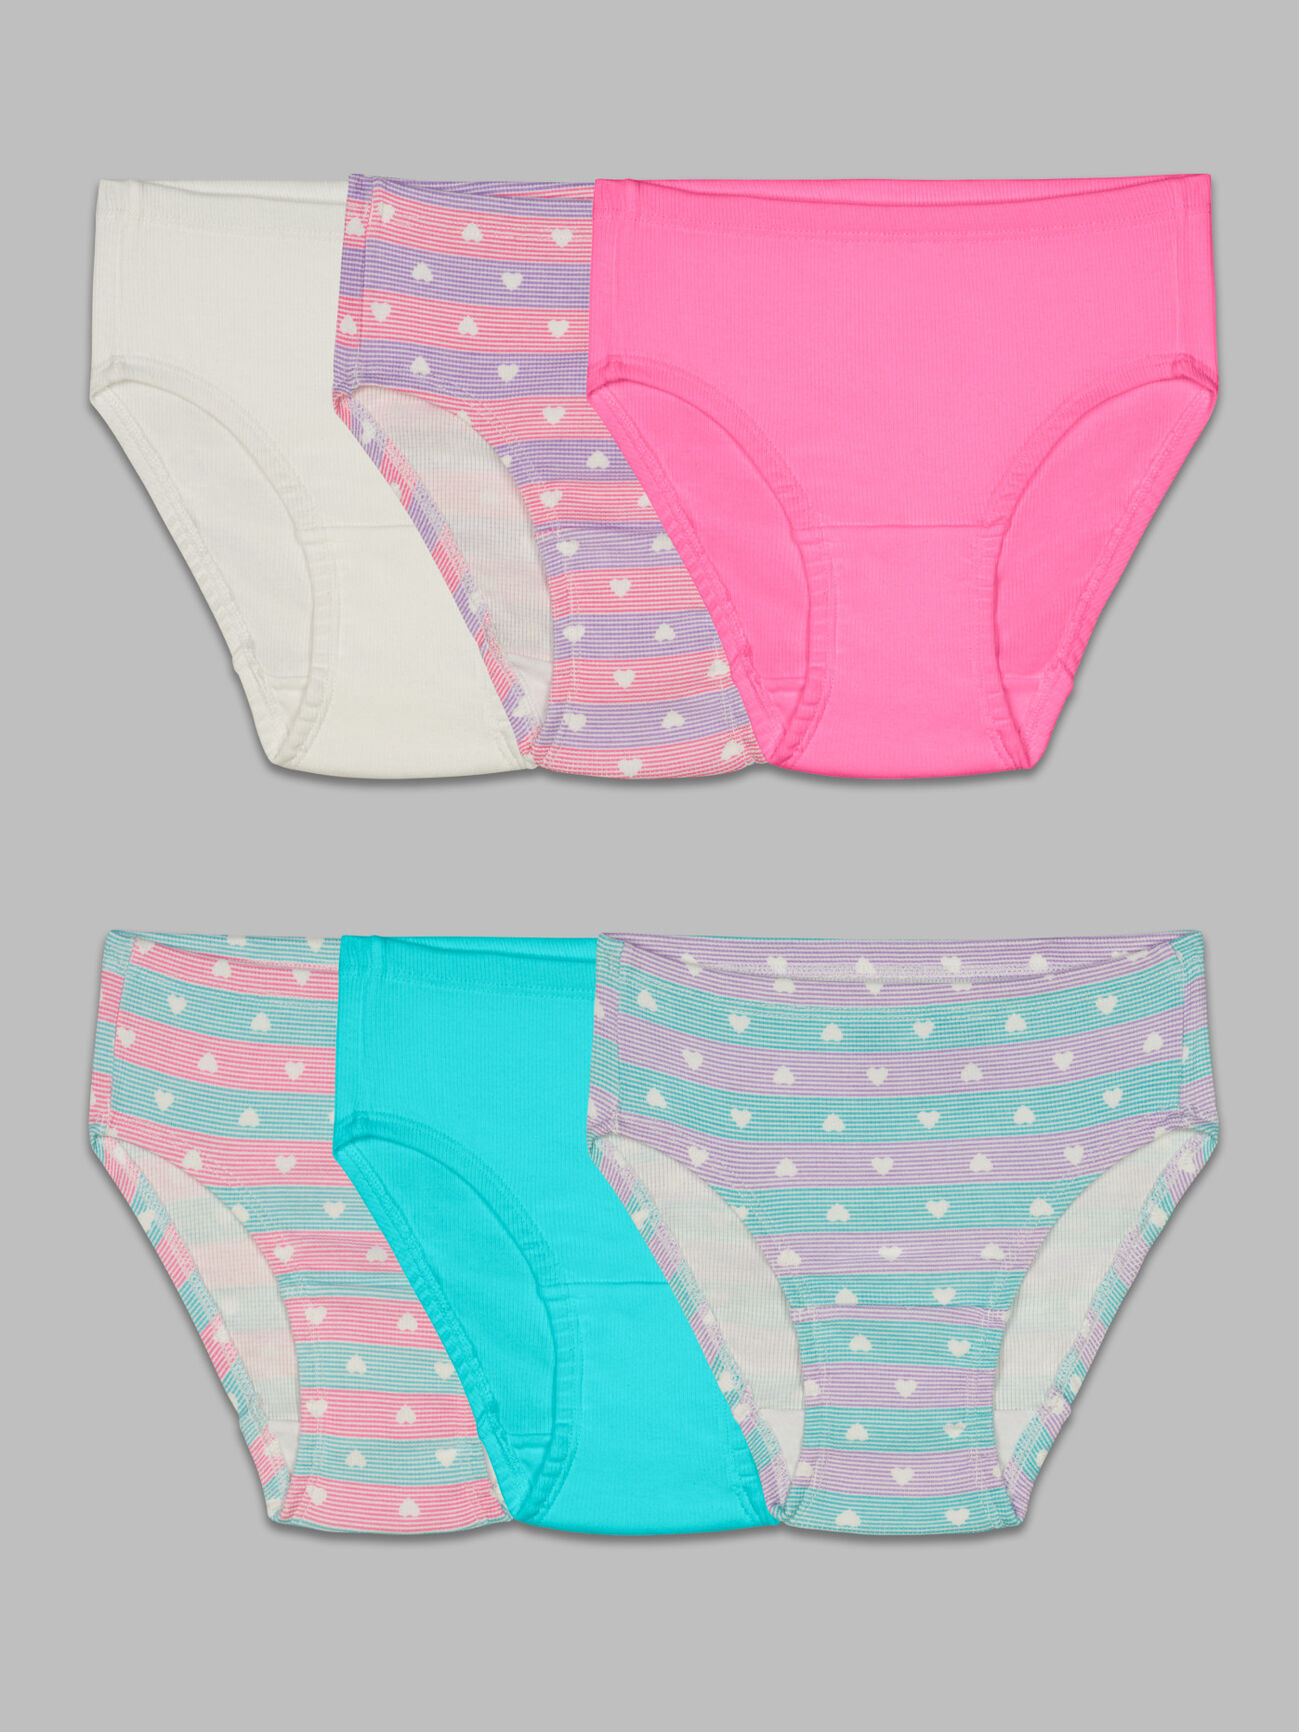 Toddler Girls' Flexible Fit Brief Underwear, 2T/3T Assorted 6 Pack